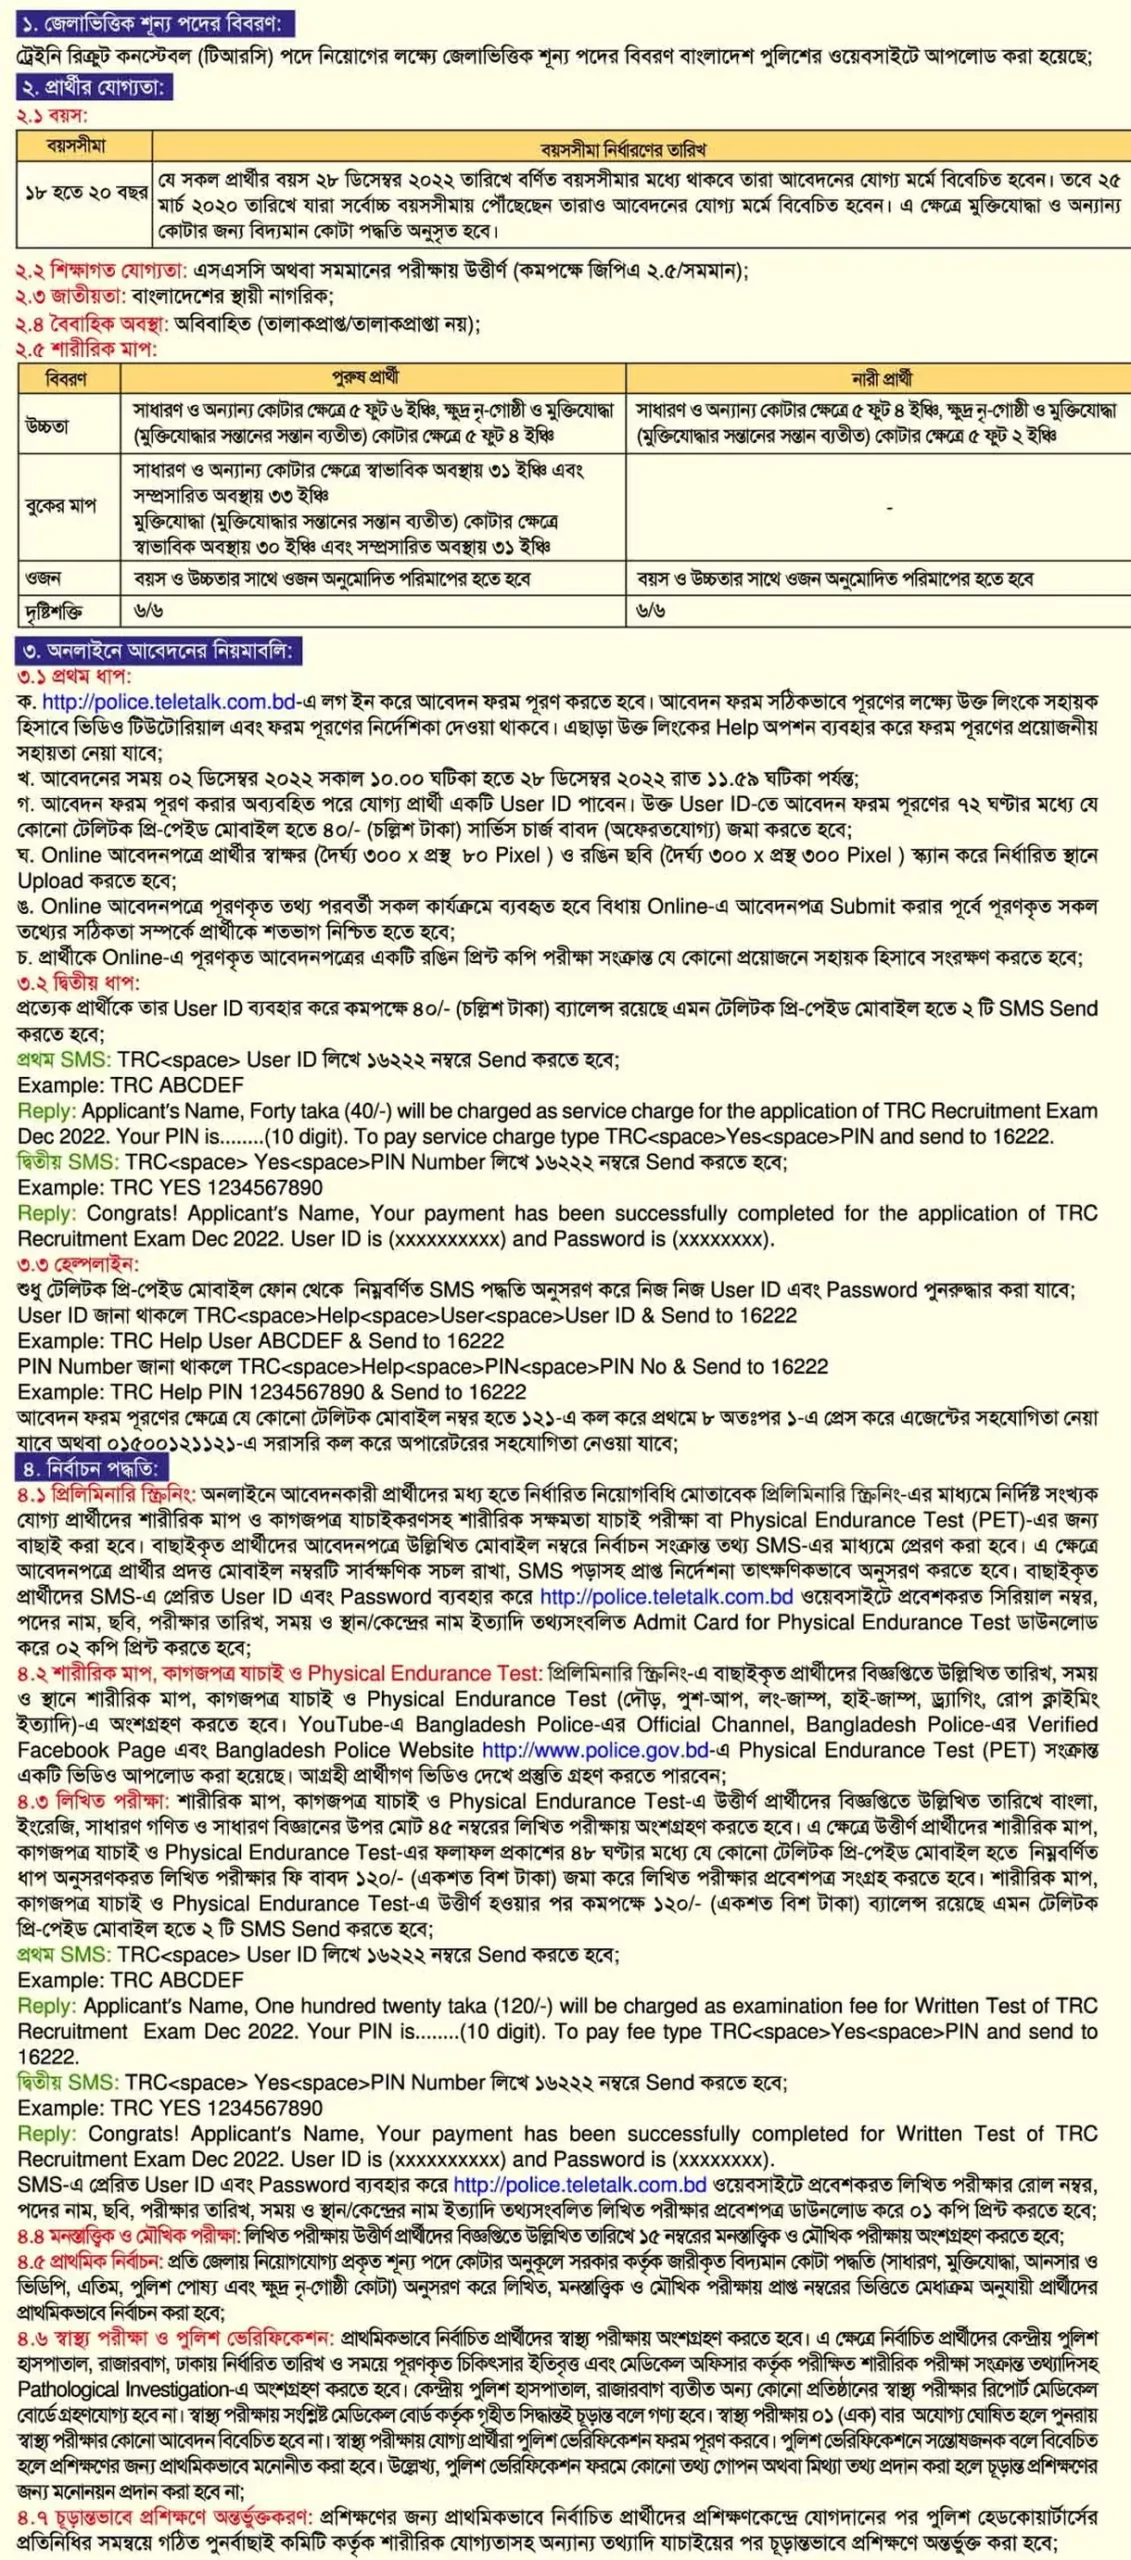 Bangladesh police TRC Job Circular 2022 002 scaled